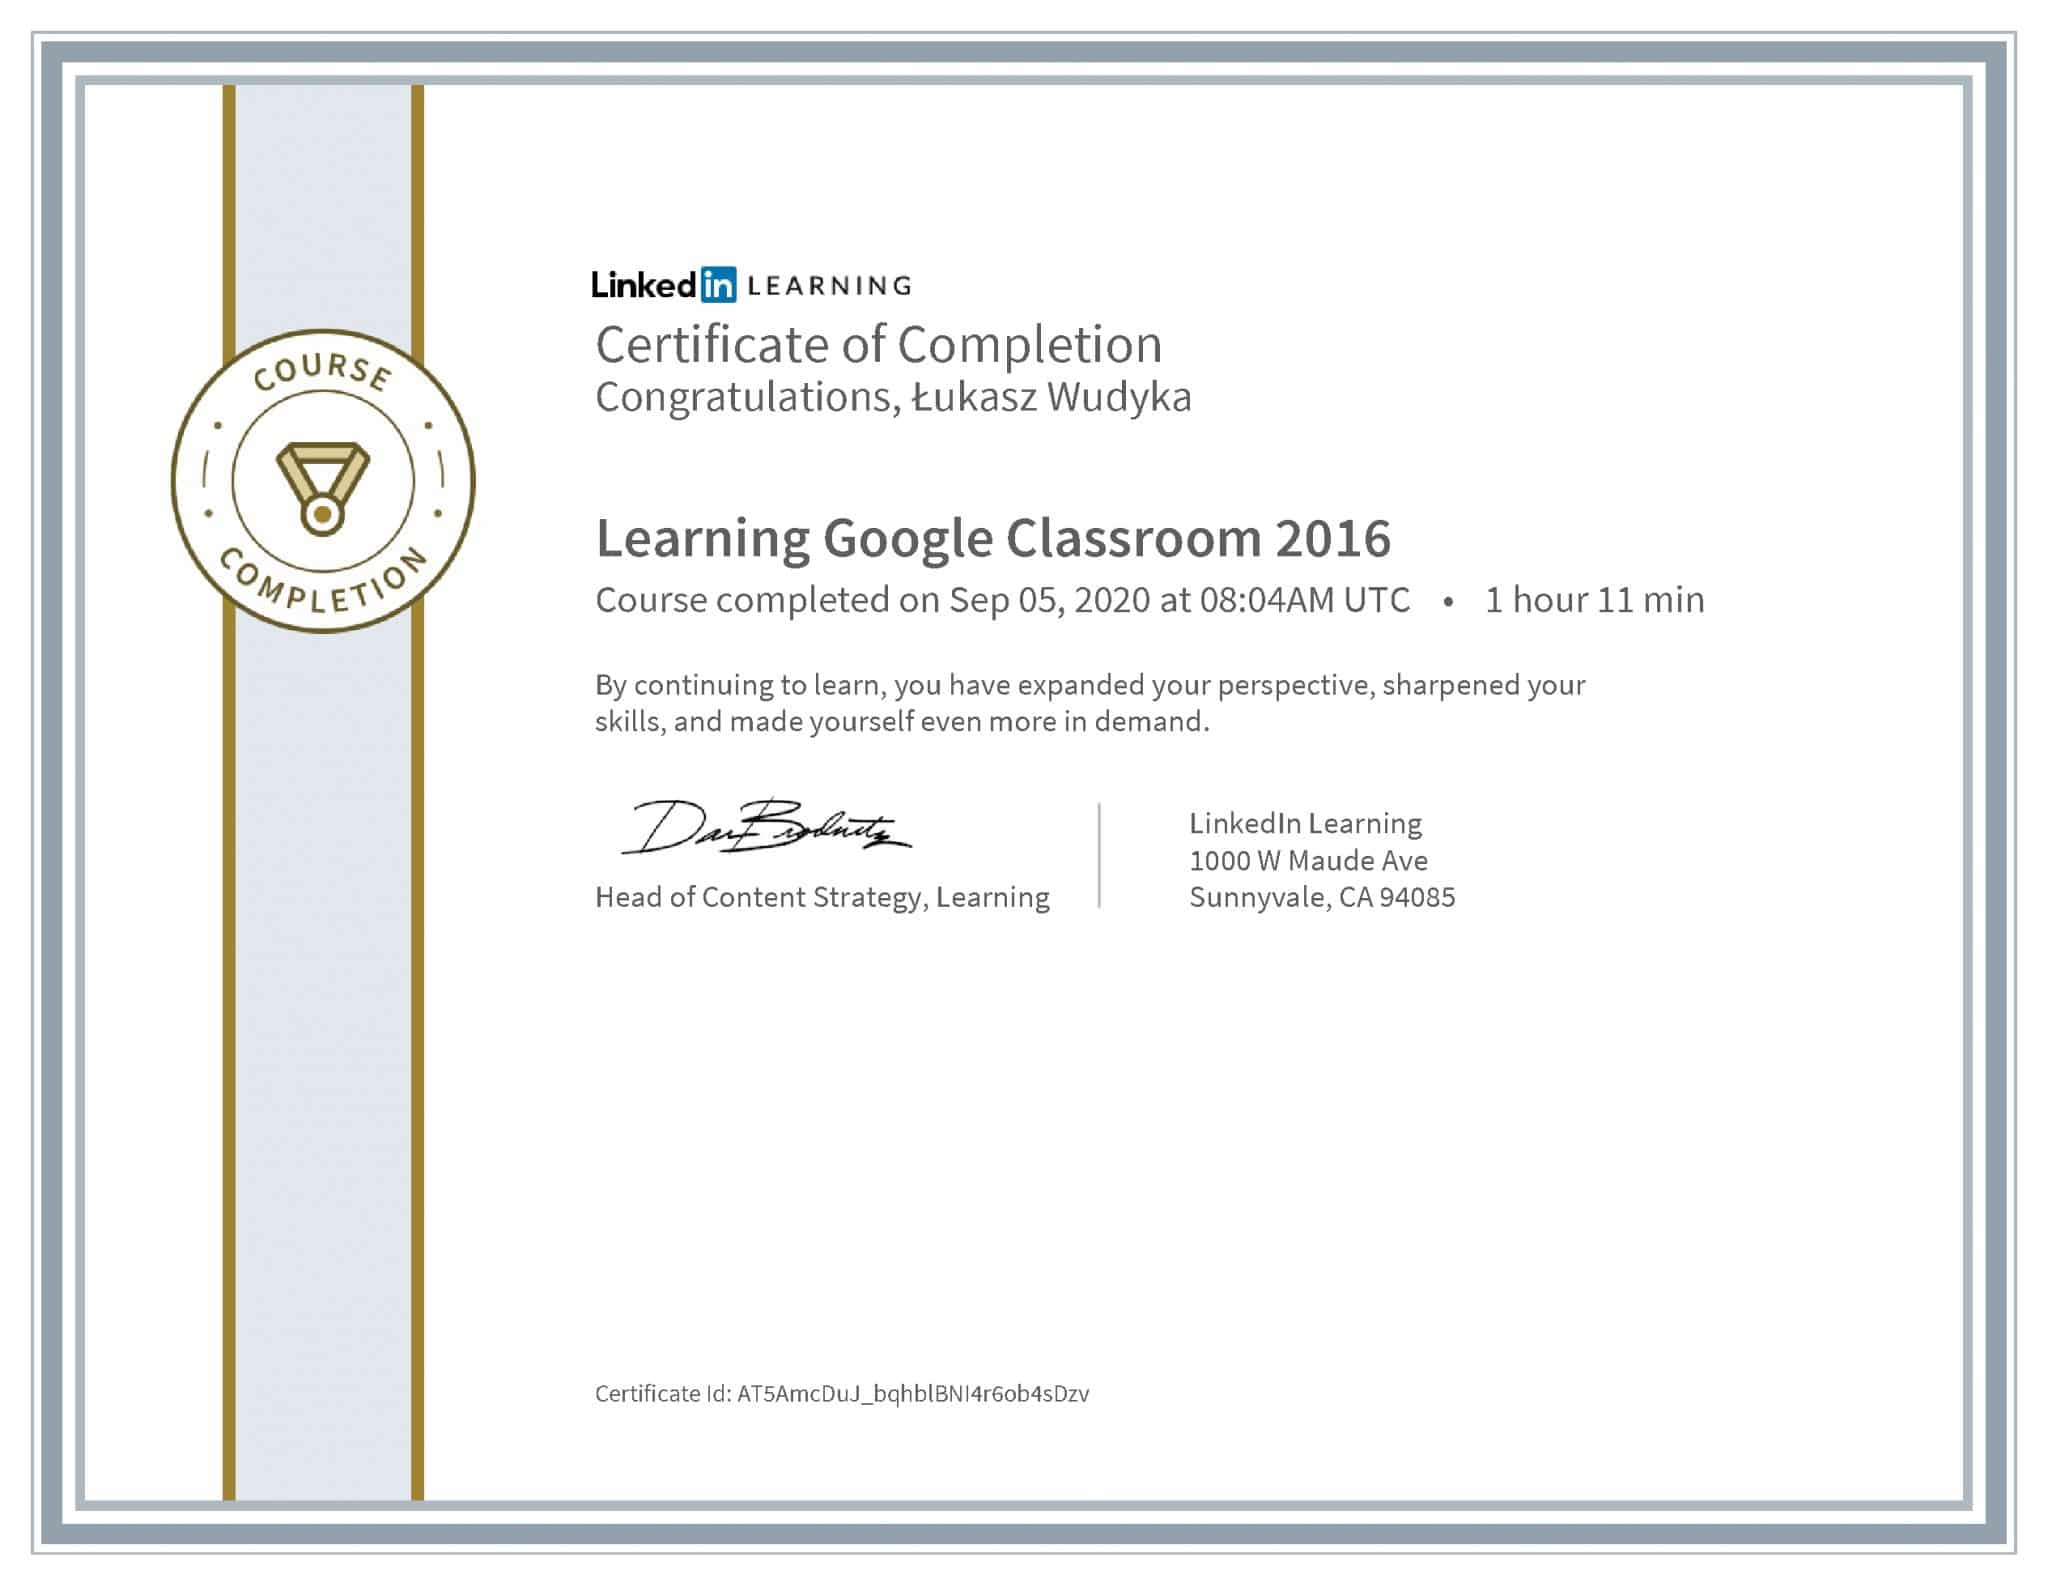 Łukasz Wudyka certyfikat LinkedIn Learning Google Classroom 2016